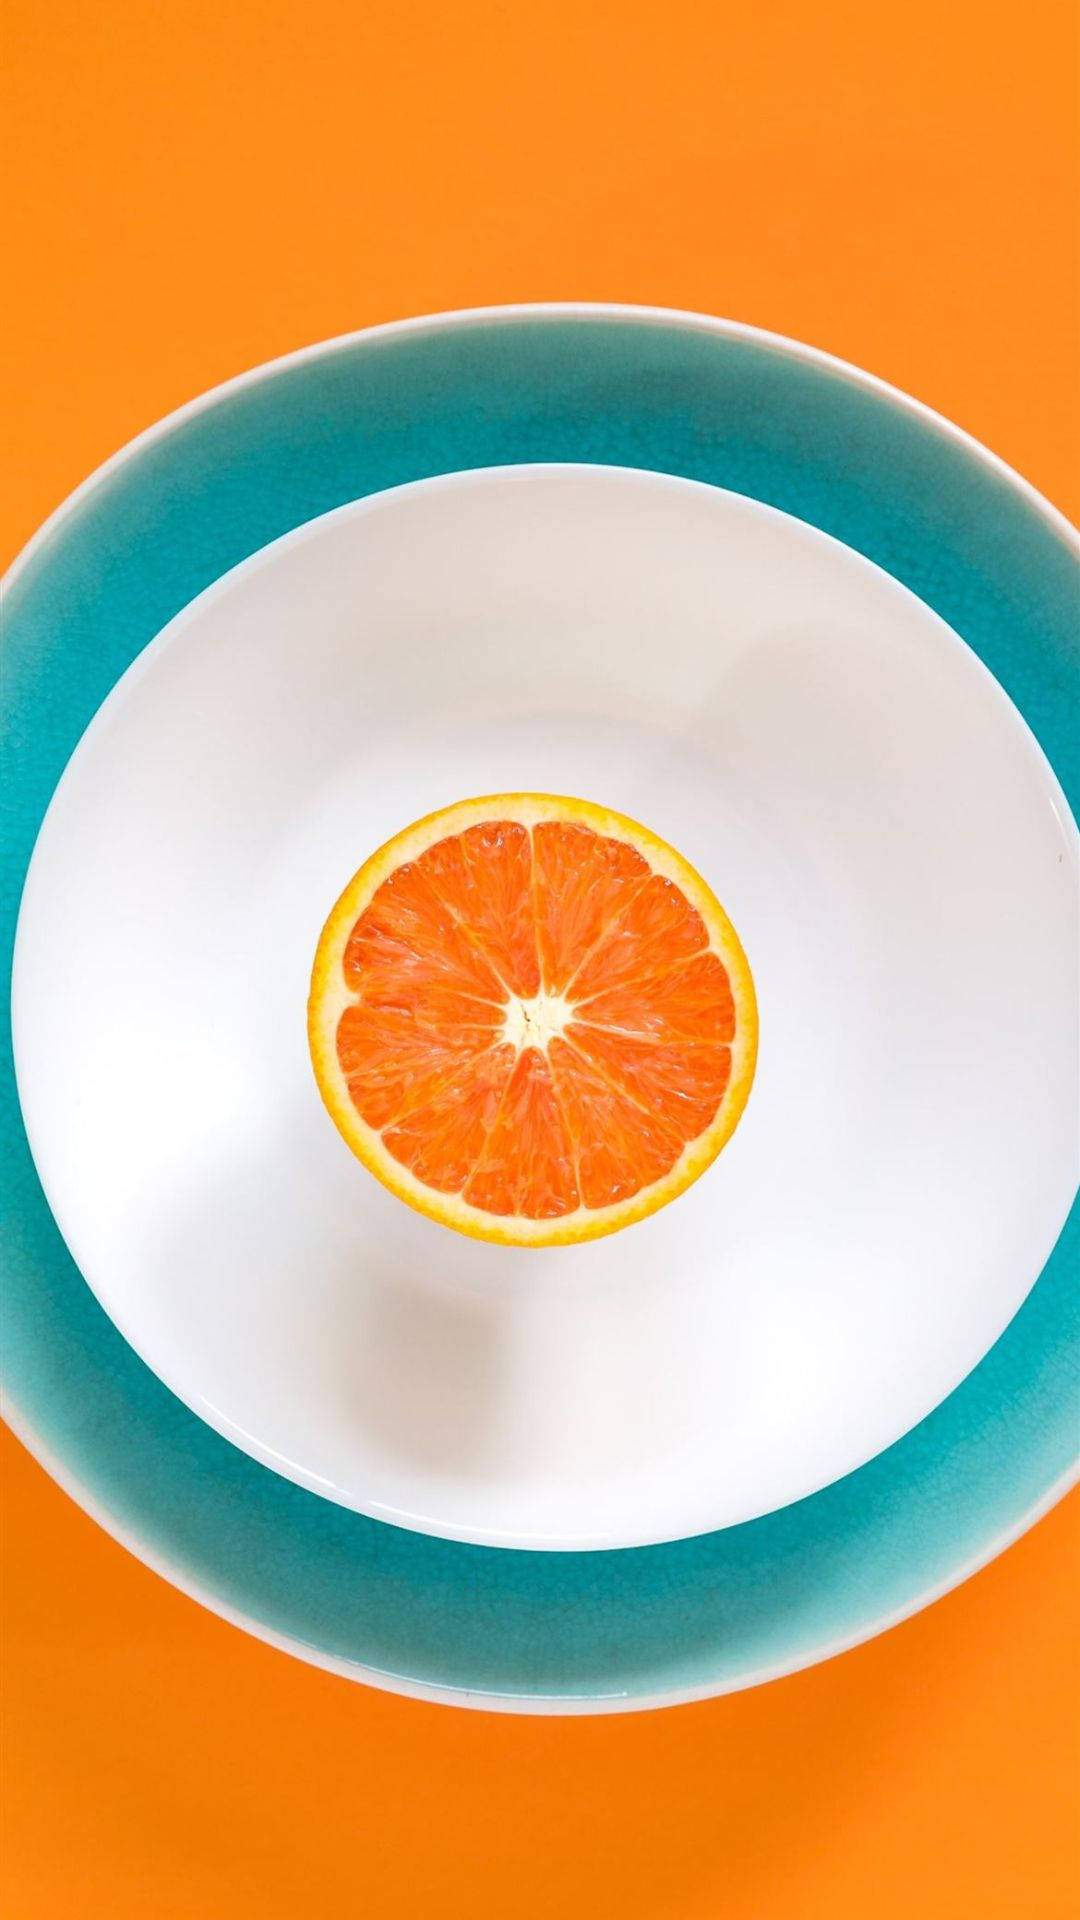 Sliced Orange Fruit On Plate